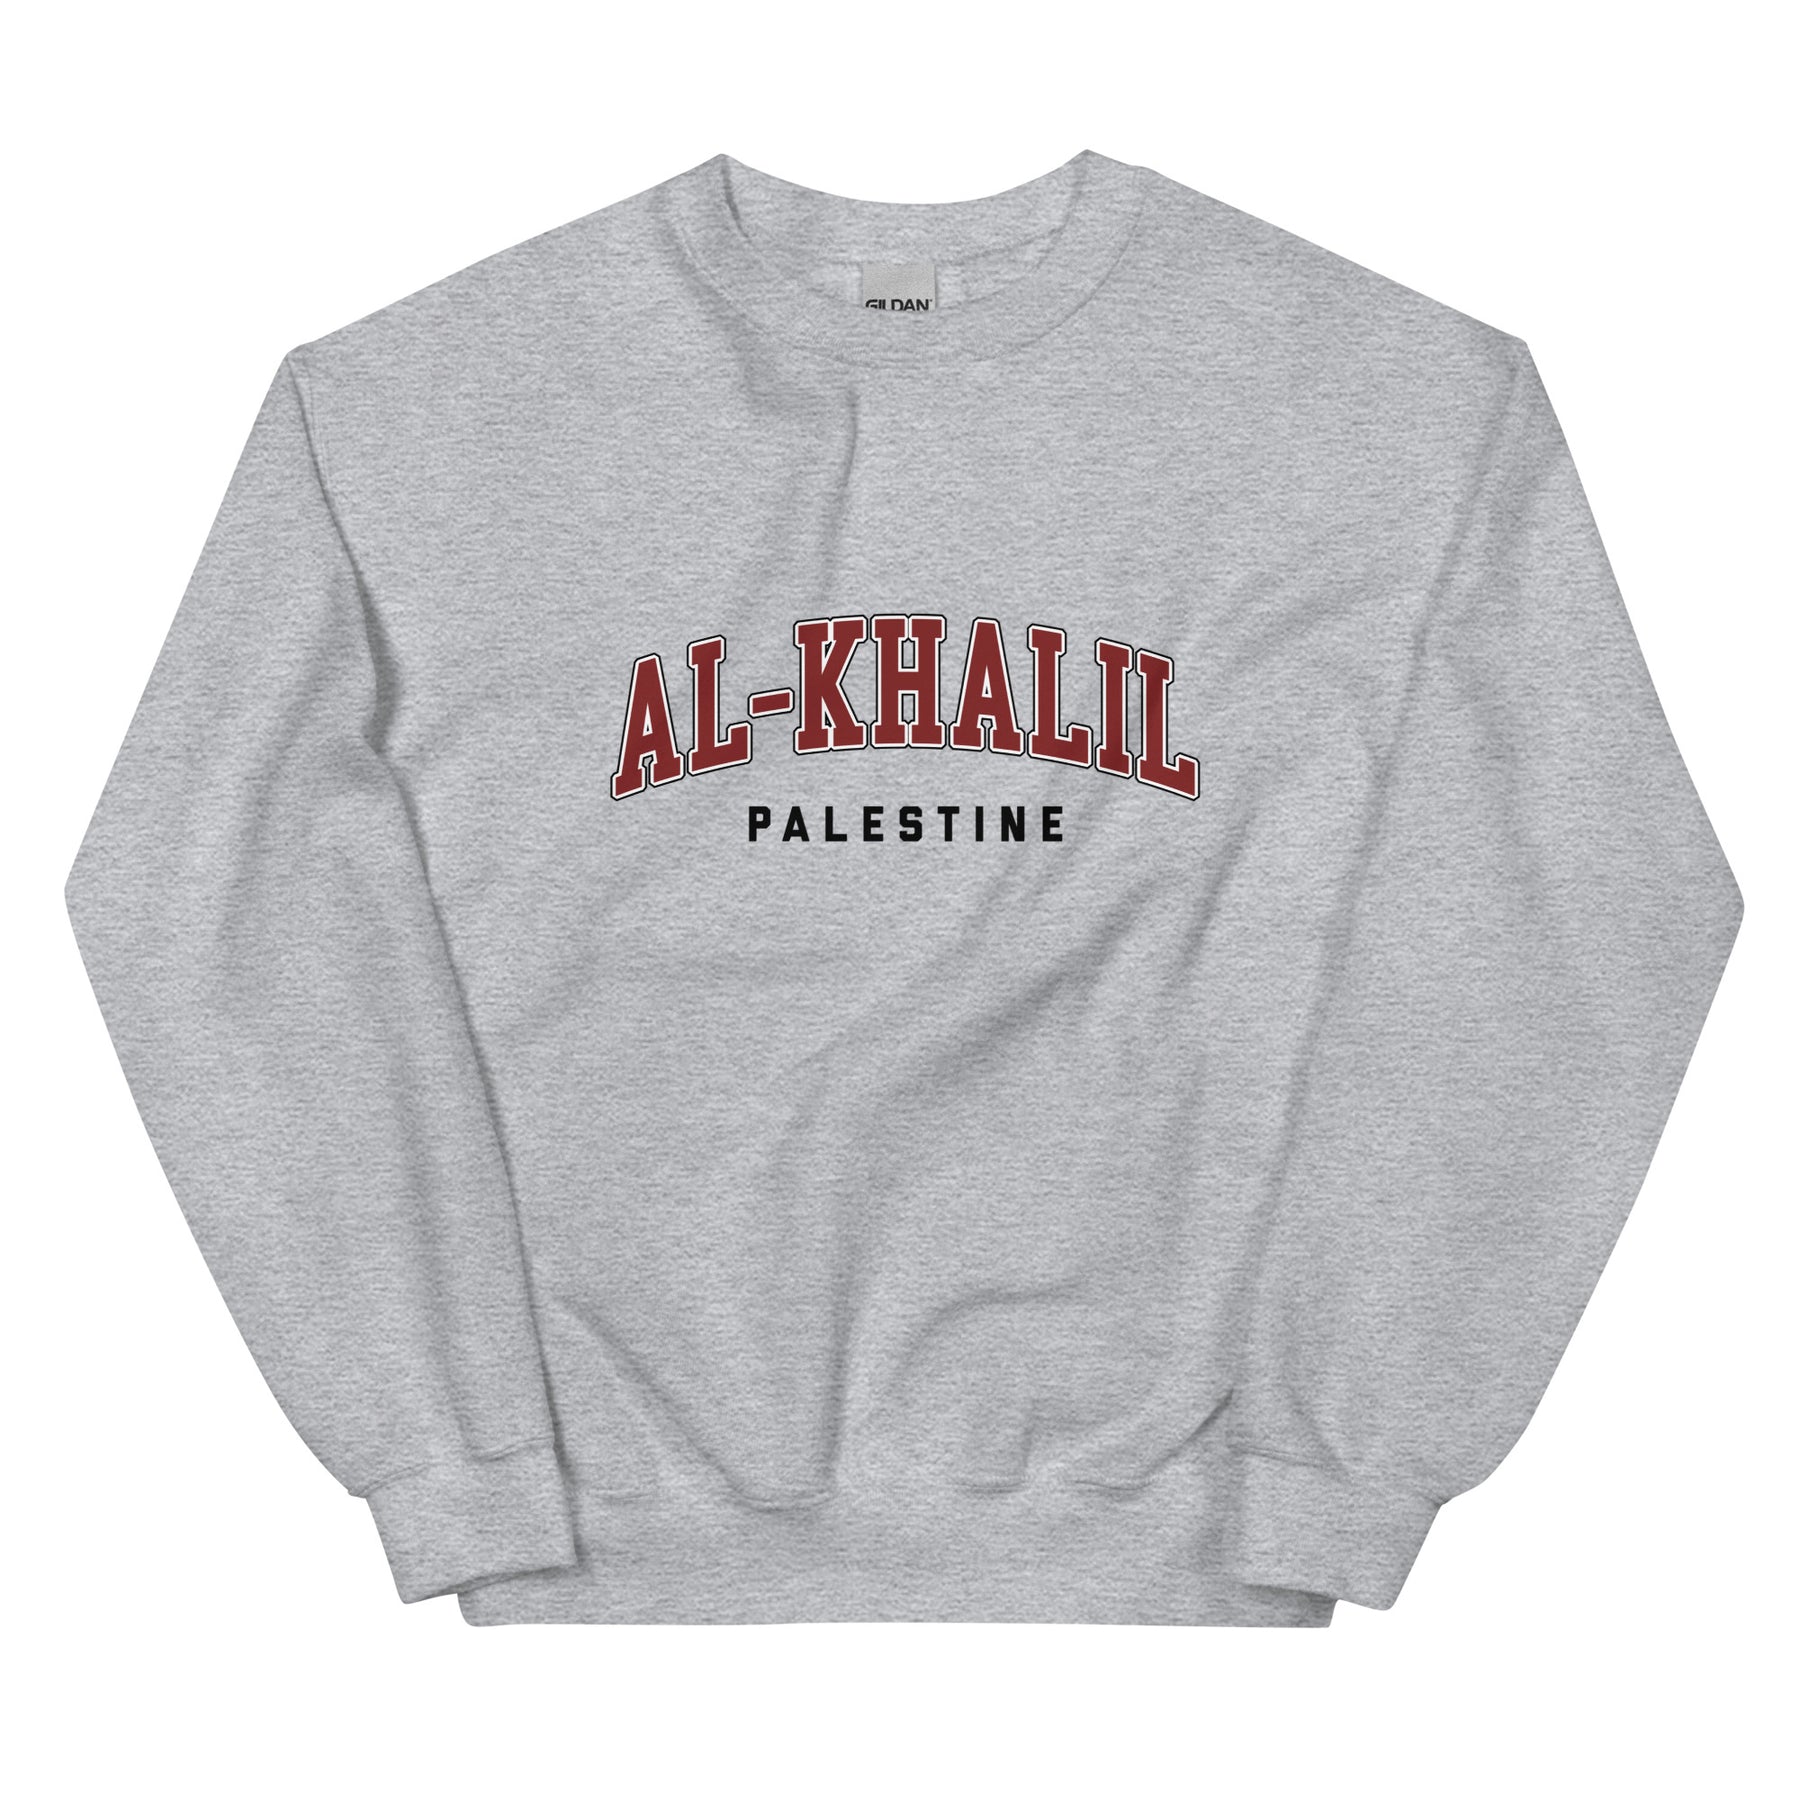 Al-Khalil, Palestine - Sweatshirt